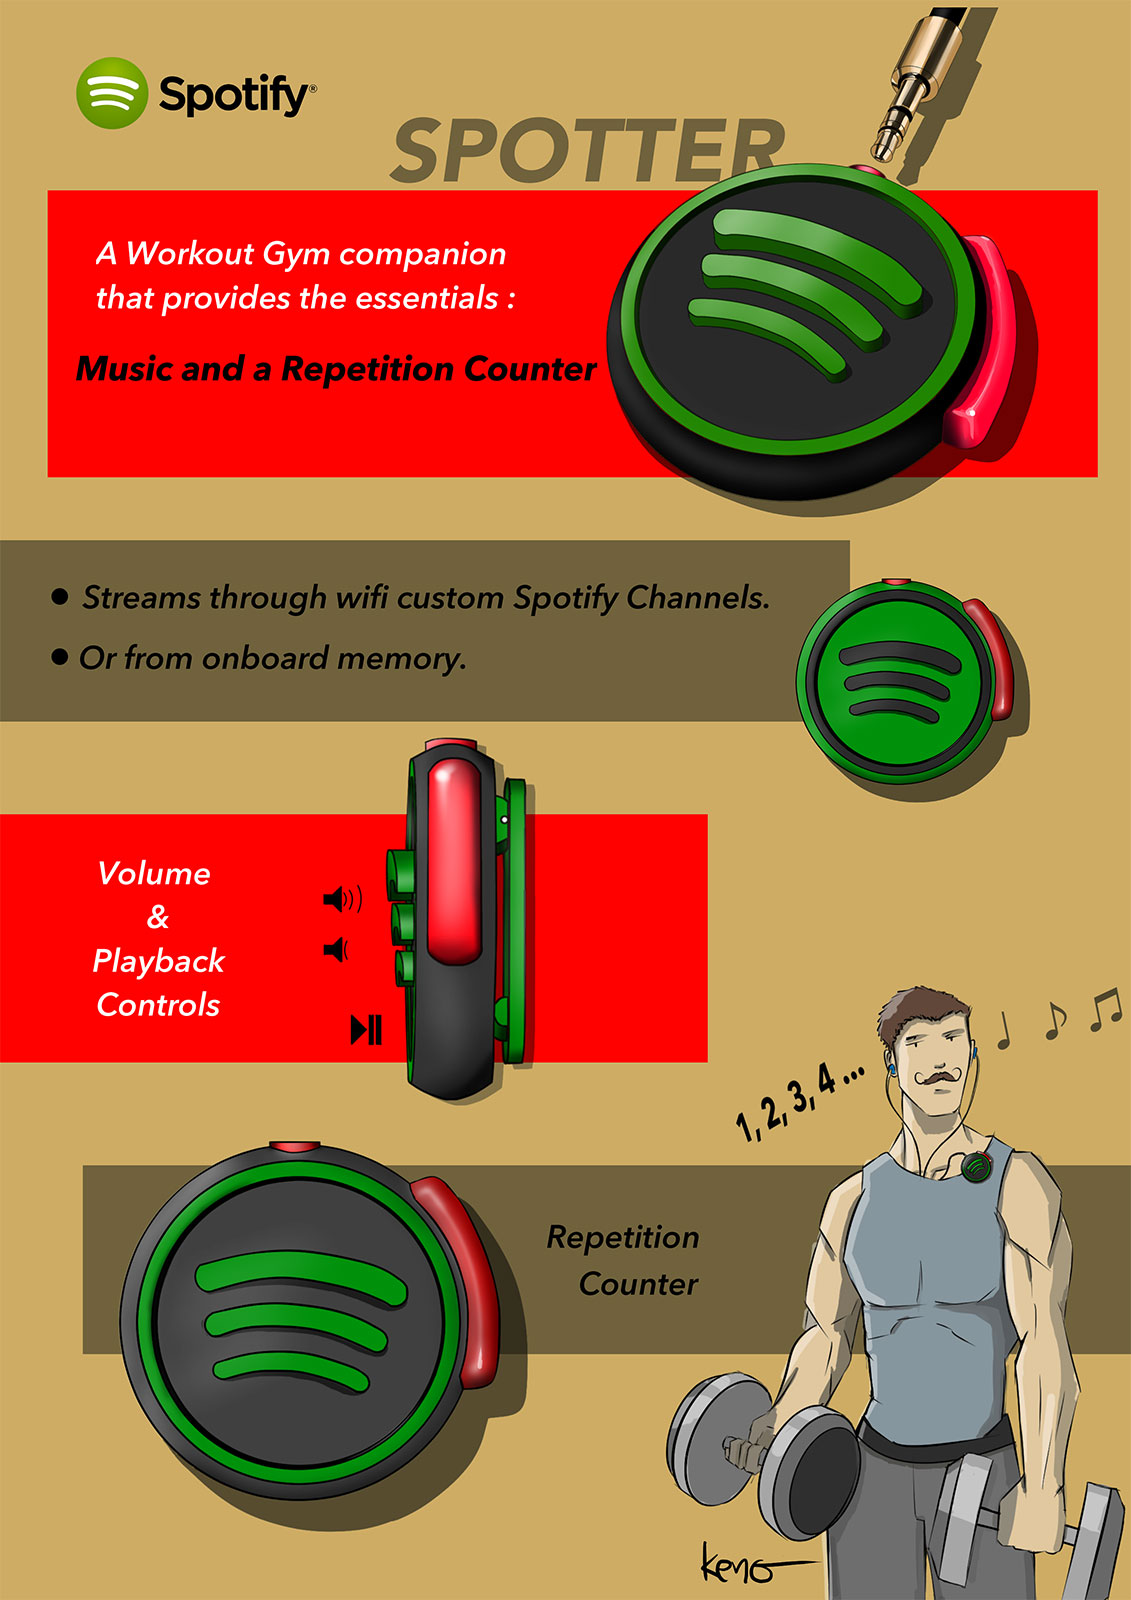 Product Concept Design Spotify Spotter Gym Companion